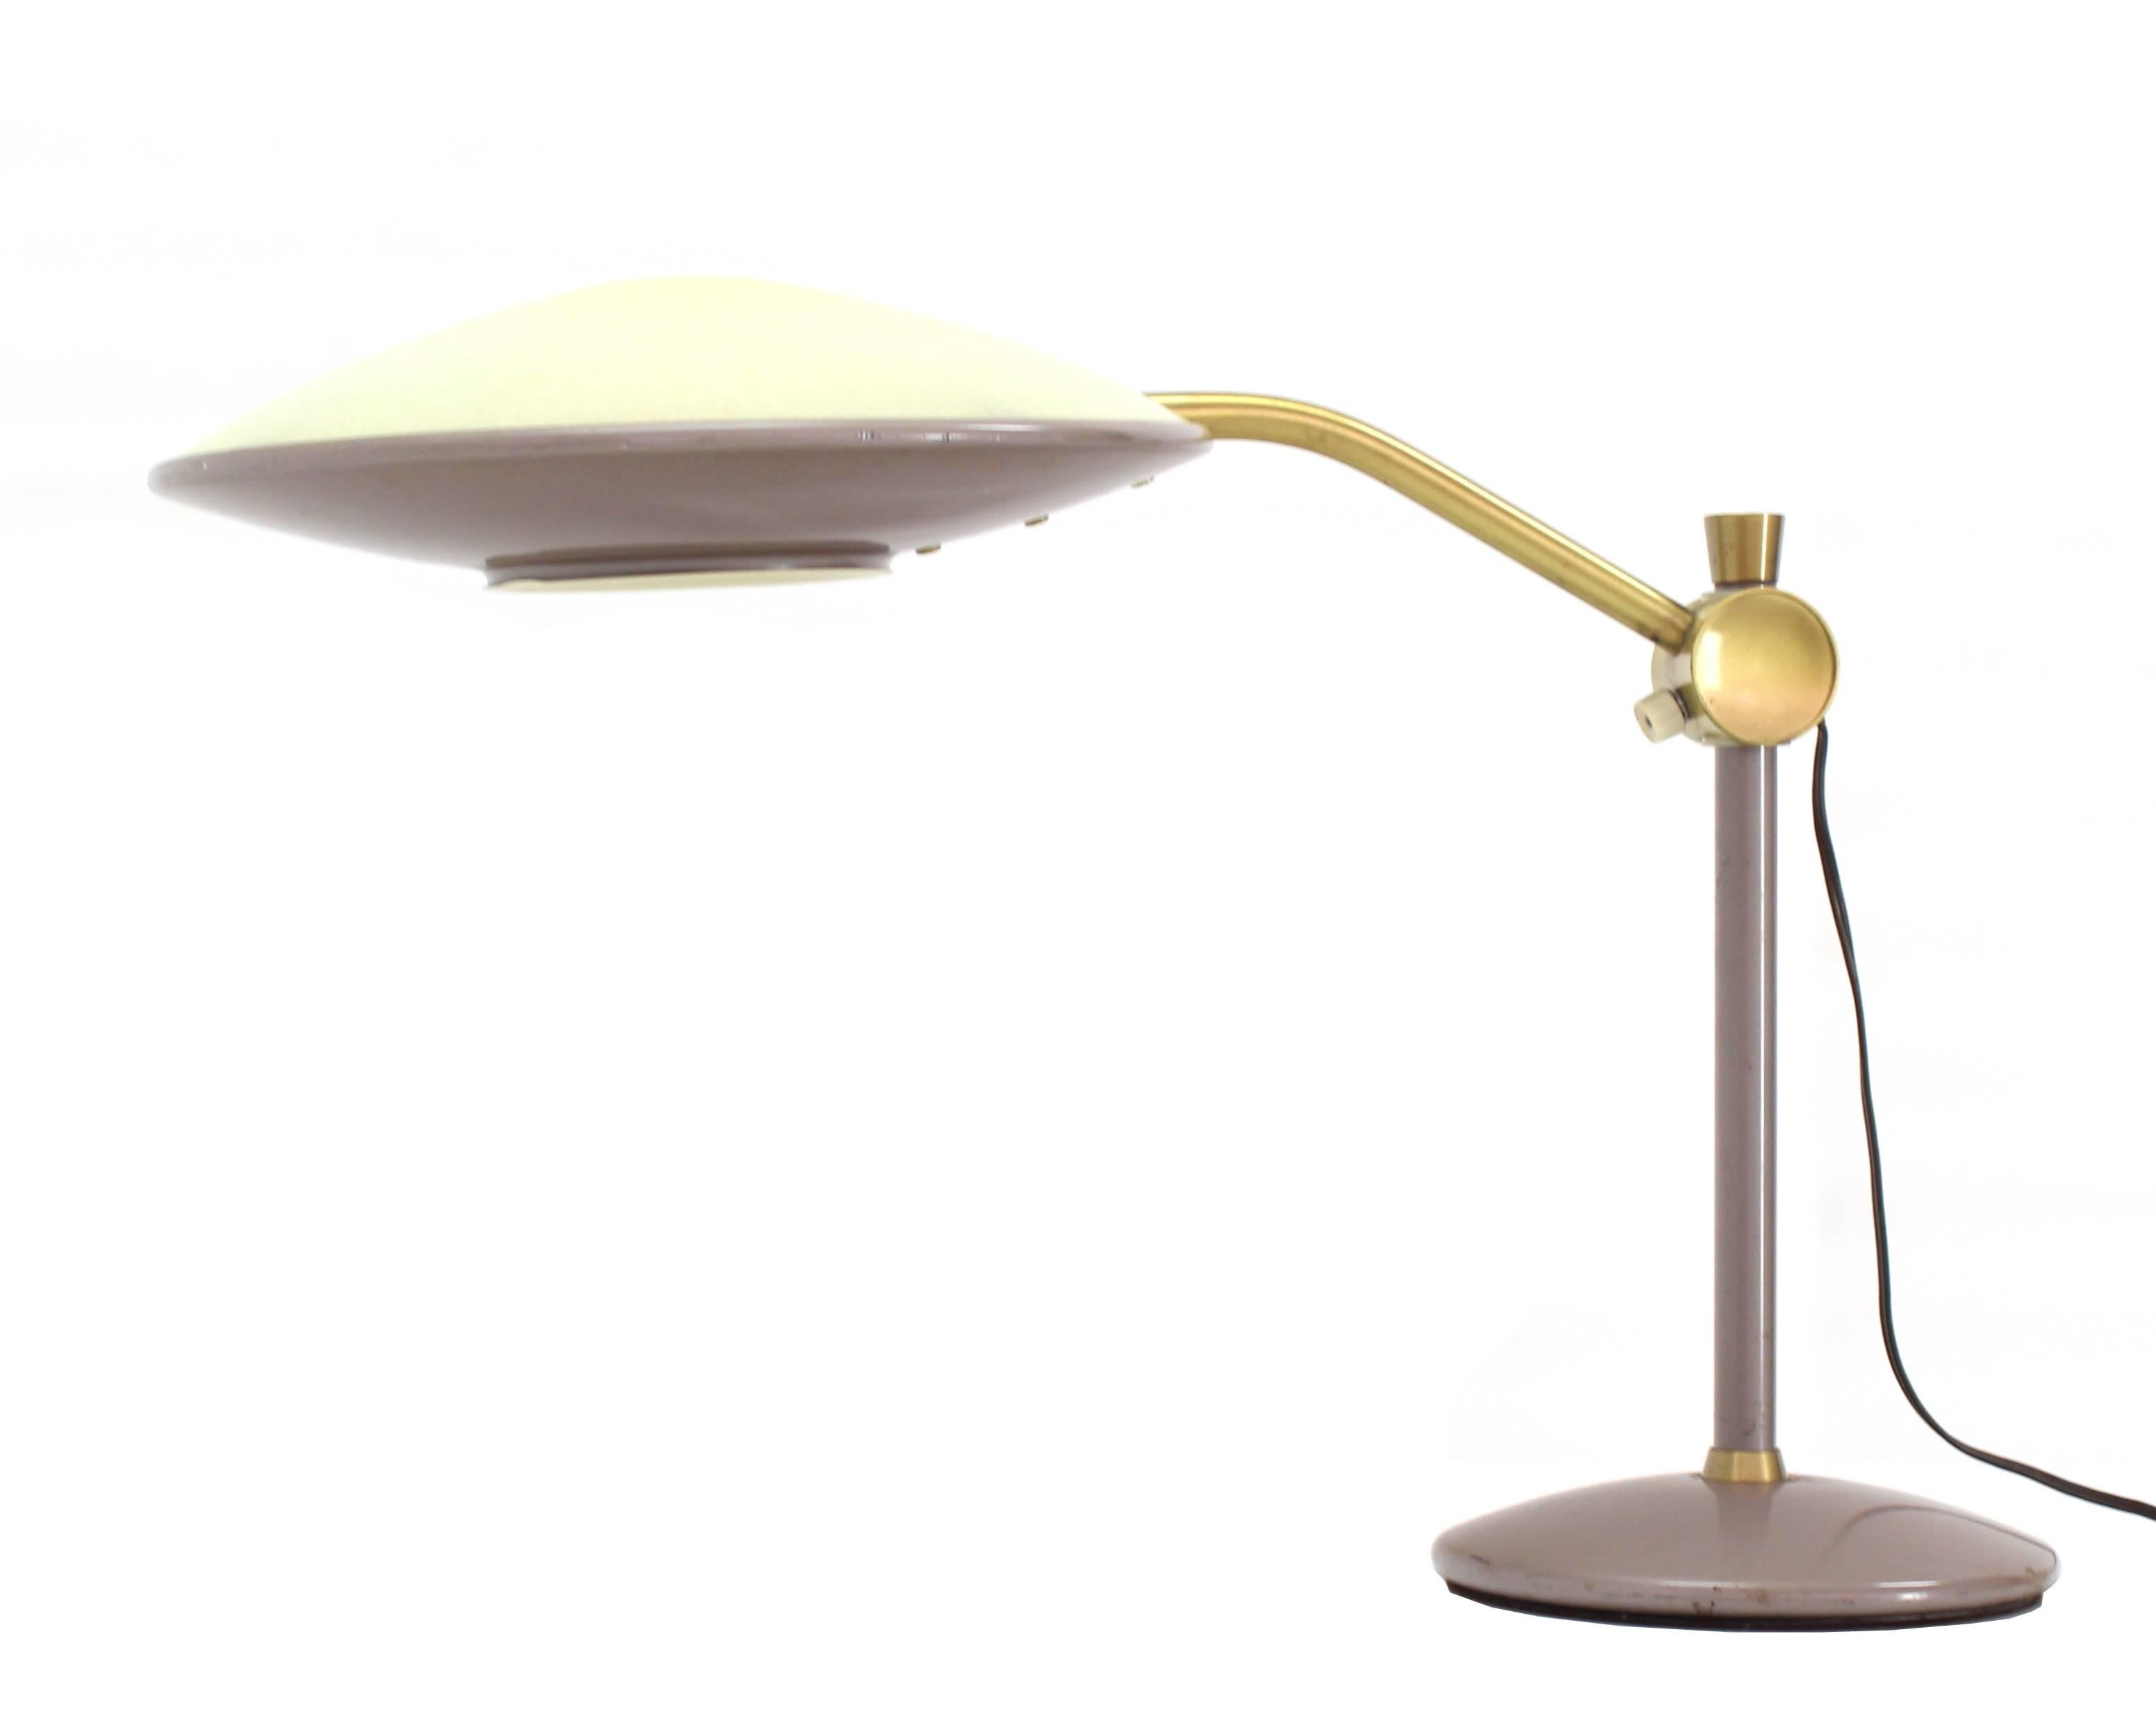 Rare design adjustable desk table lamp.